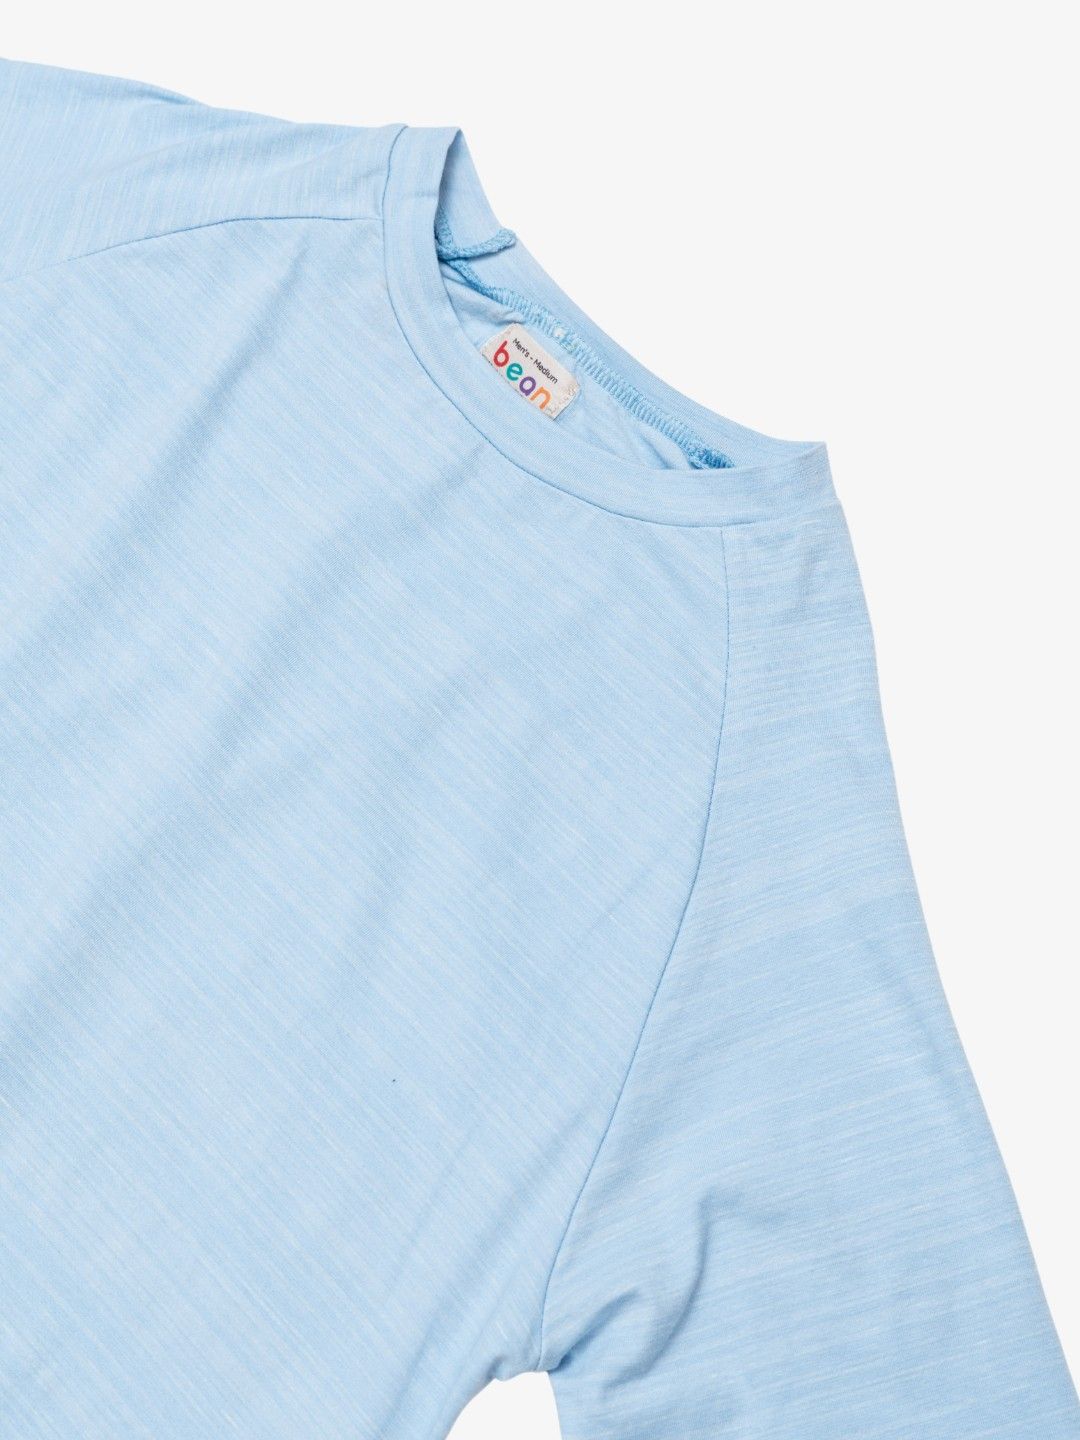 bean fashion Striped Sleep Pajama Set for Dad (No Color- Image 2)